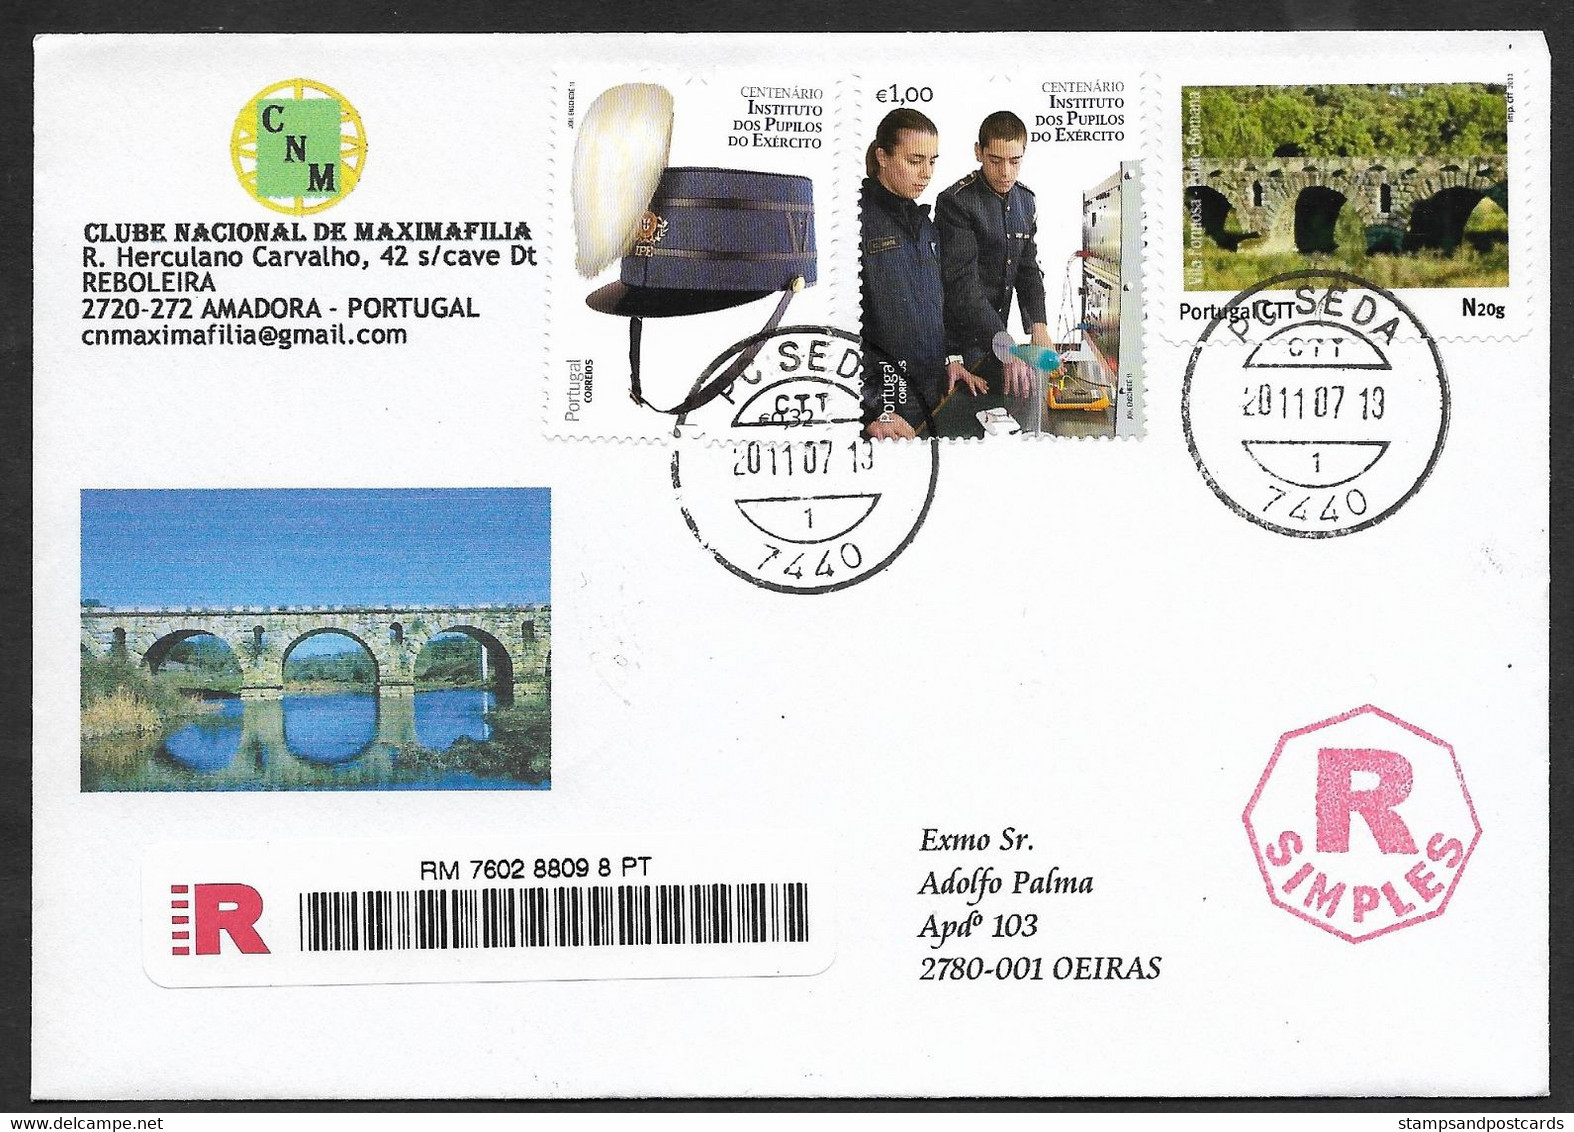 Portugal Lettre R Timbre Personnalisé Pont Romain Seda Alter Do Chão Roman Bridge Personalized Stamp R Cover - Briefe U. Dokumente